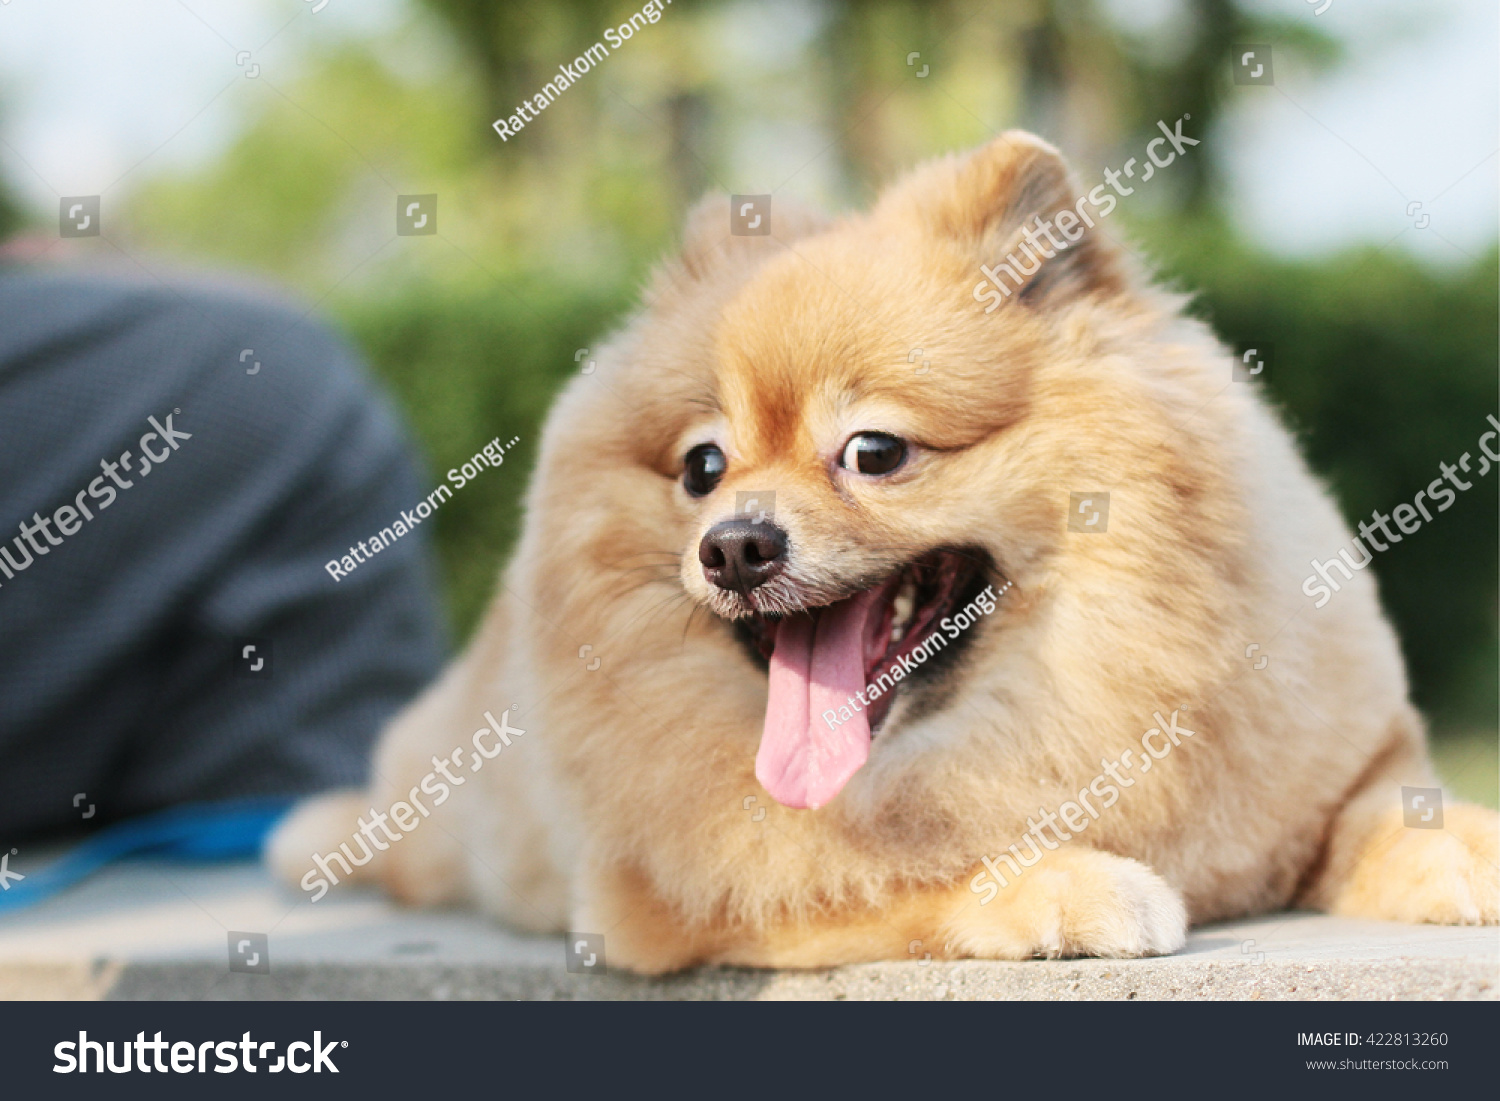 Pomeranian Puppy Dog Grooming Short Hair Stock Photo Edit Now 422813260